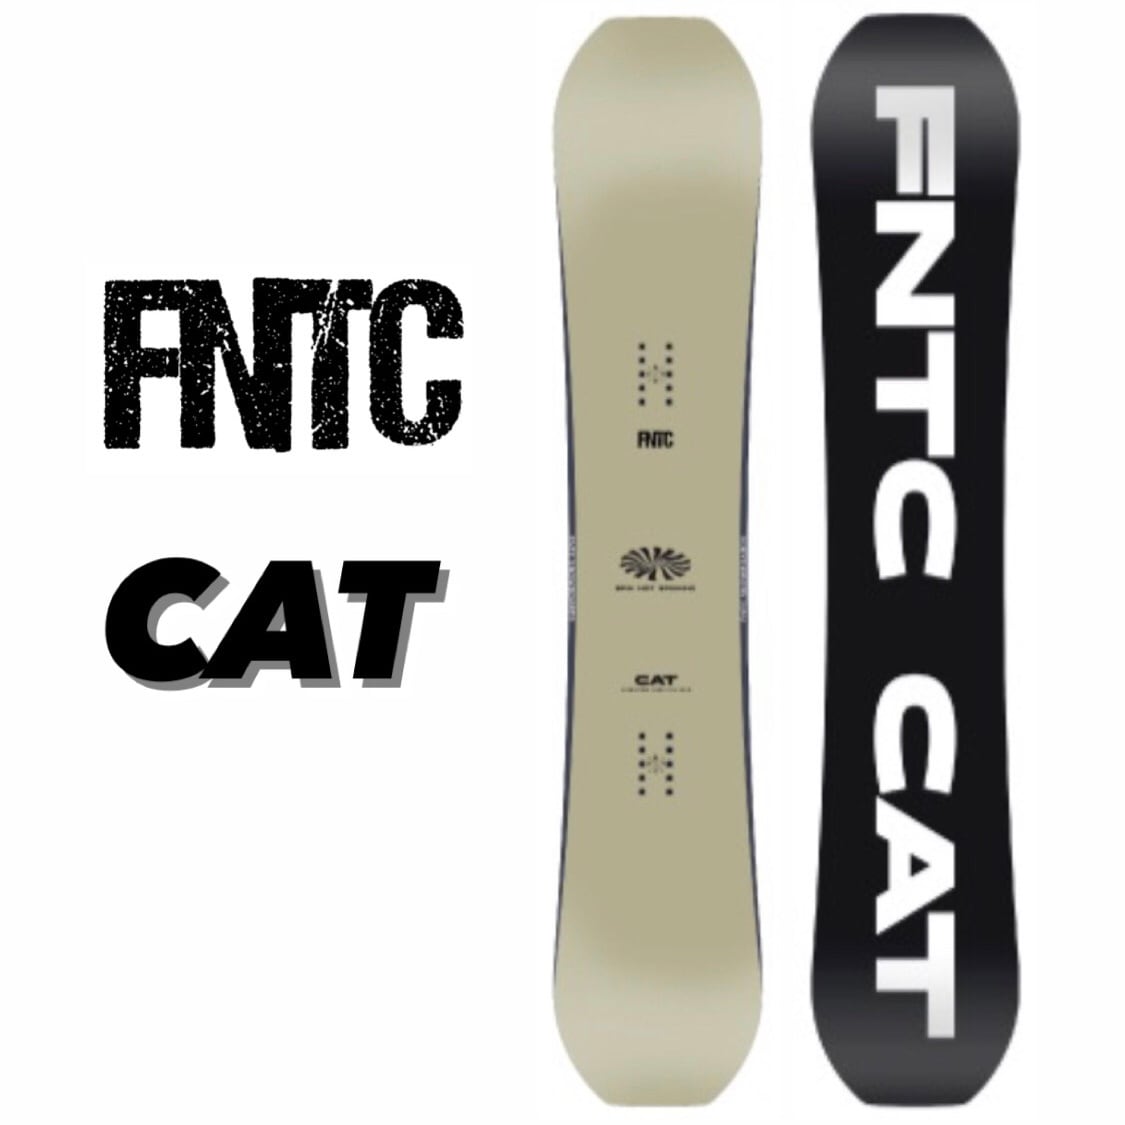 FANATIC（FNTC） CAT